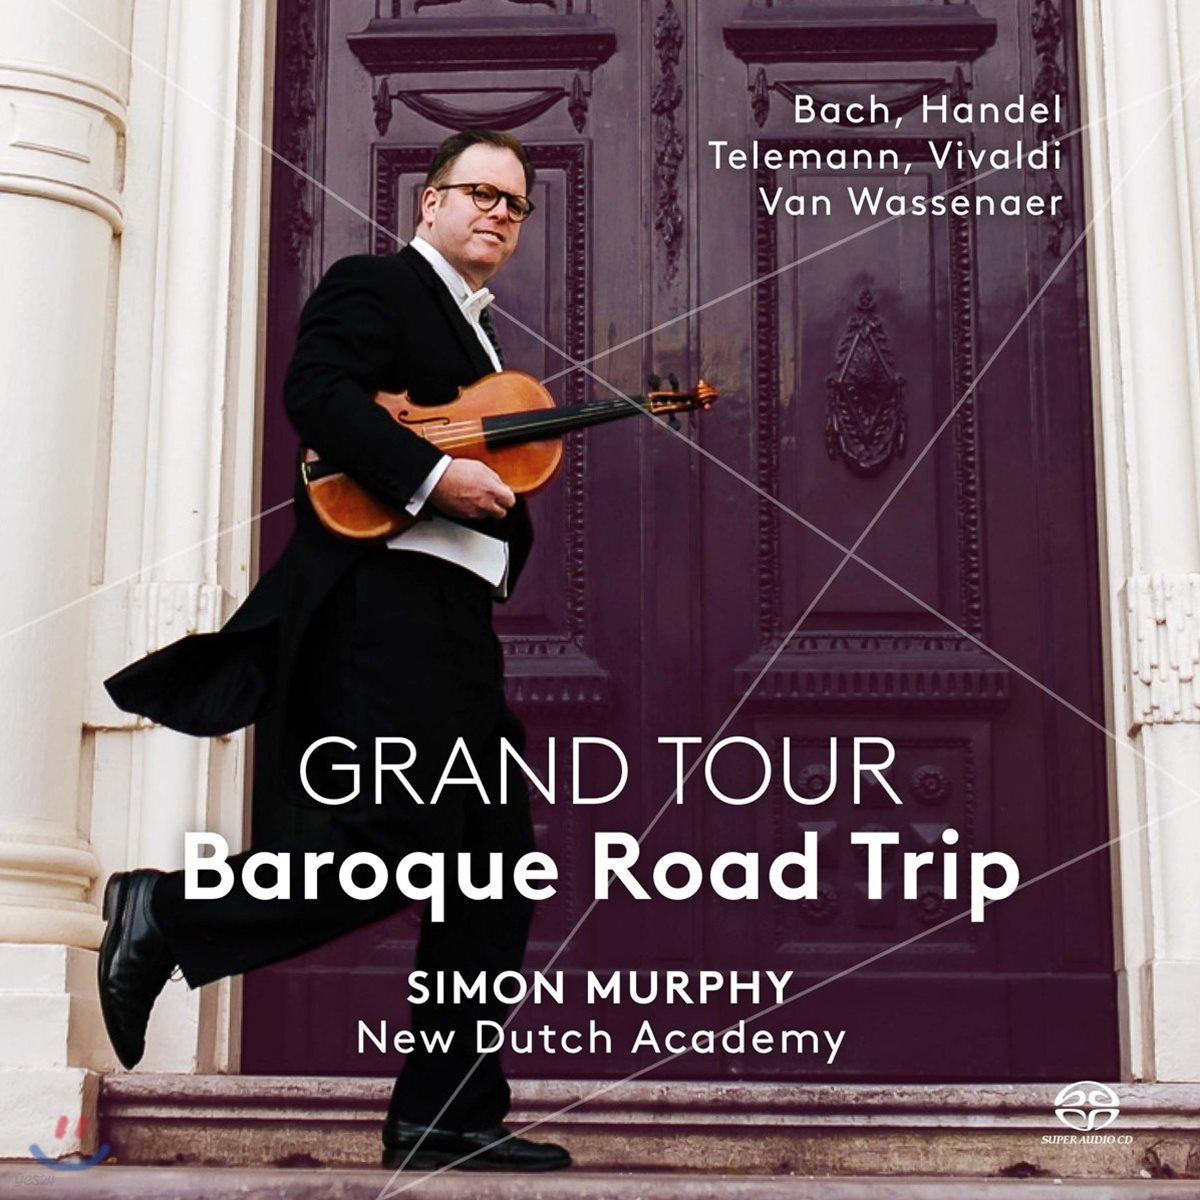 Simon Murphy 그랜드 투어 - 바로크 로드 트립 (Grand Tour - Baroque Road Trip) 뉴 더치 아카데미, 사이먼 머피